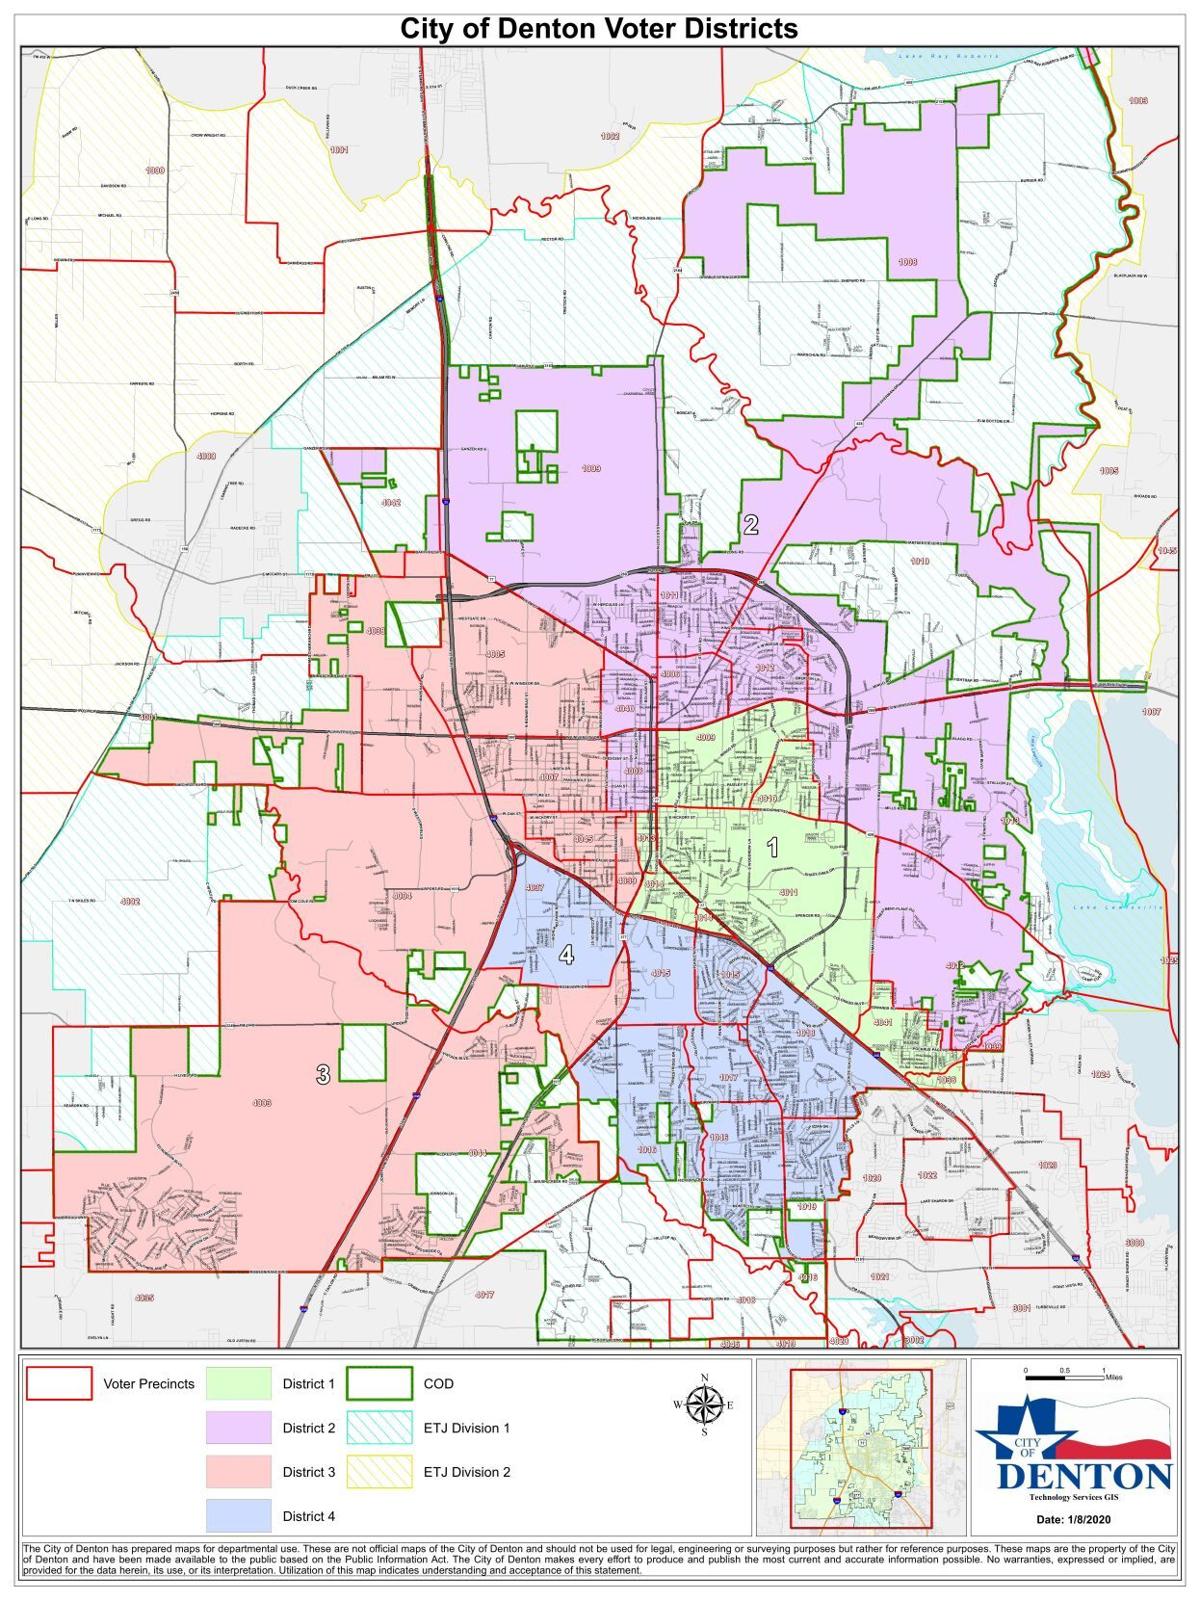 Current Denton City Council districts